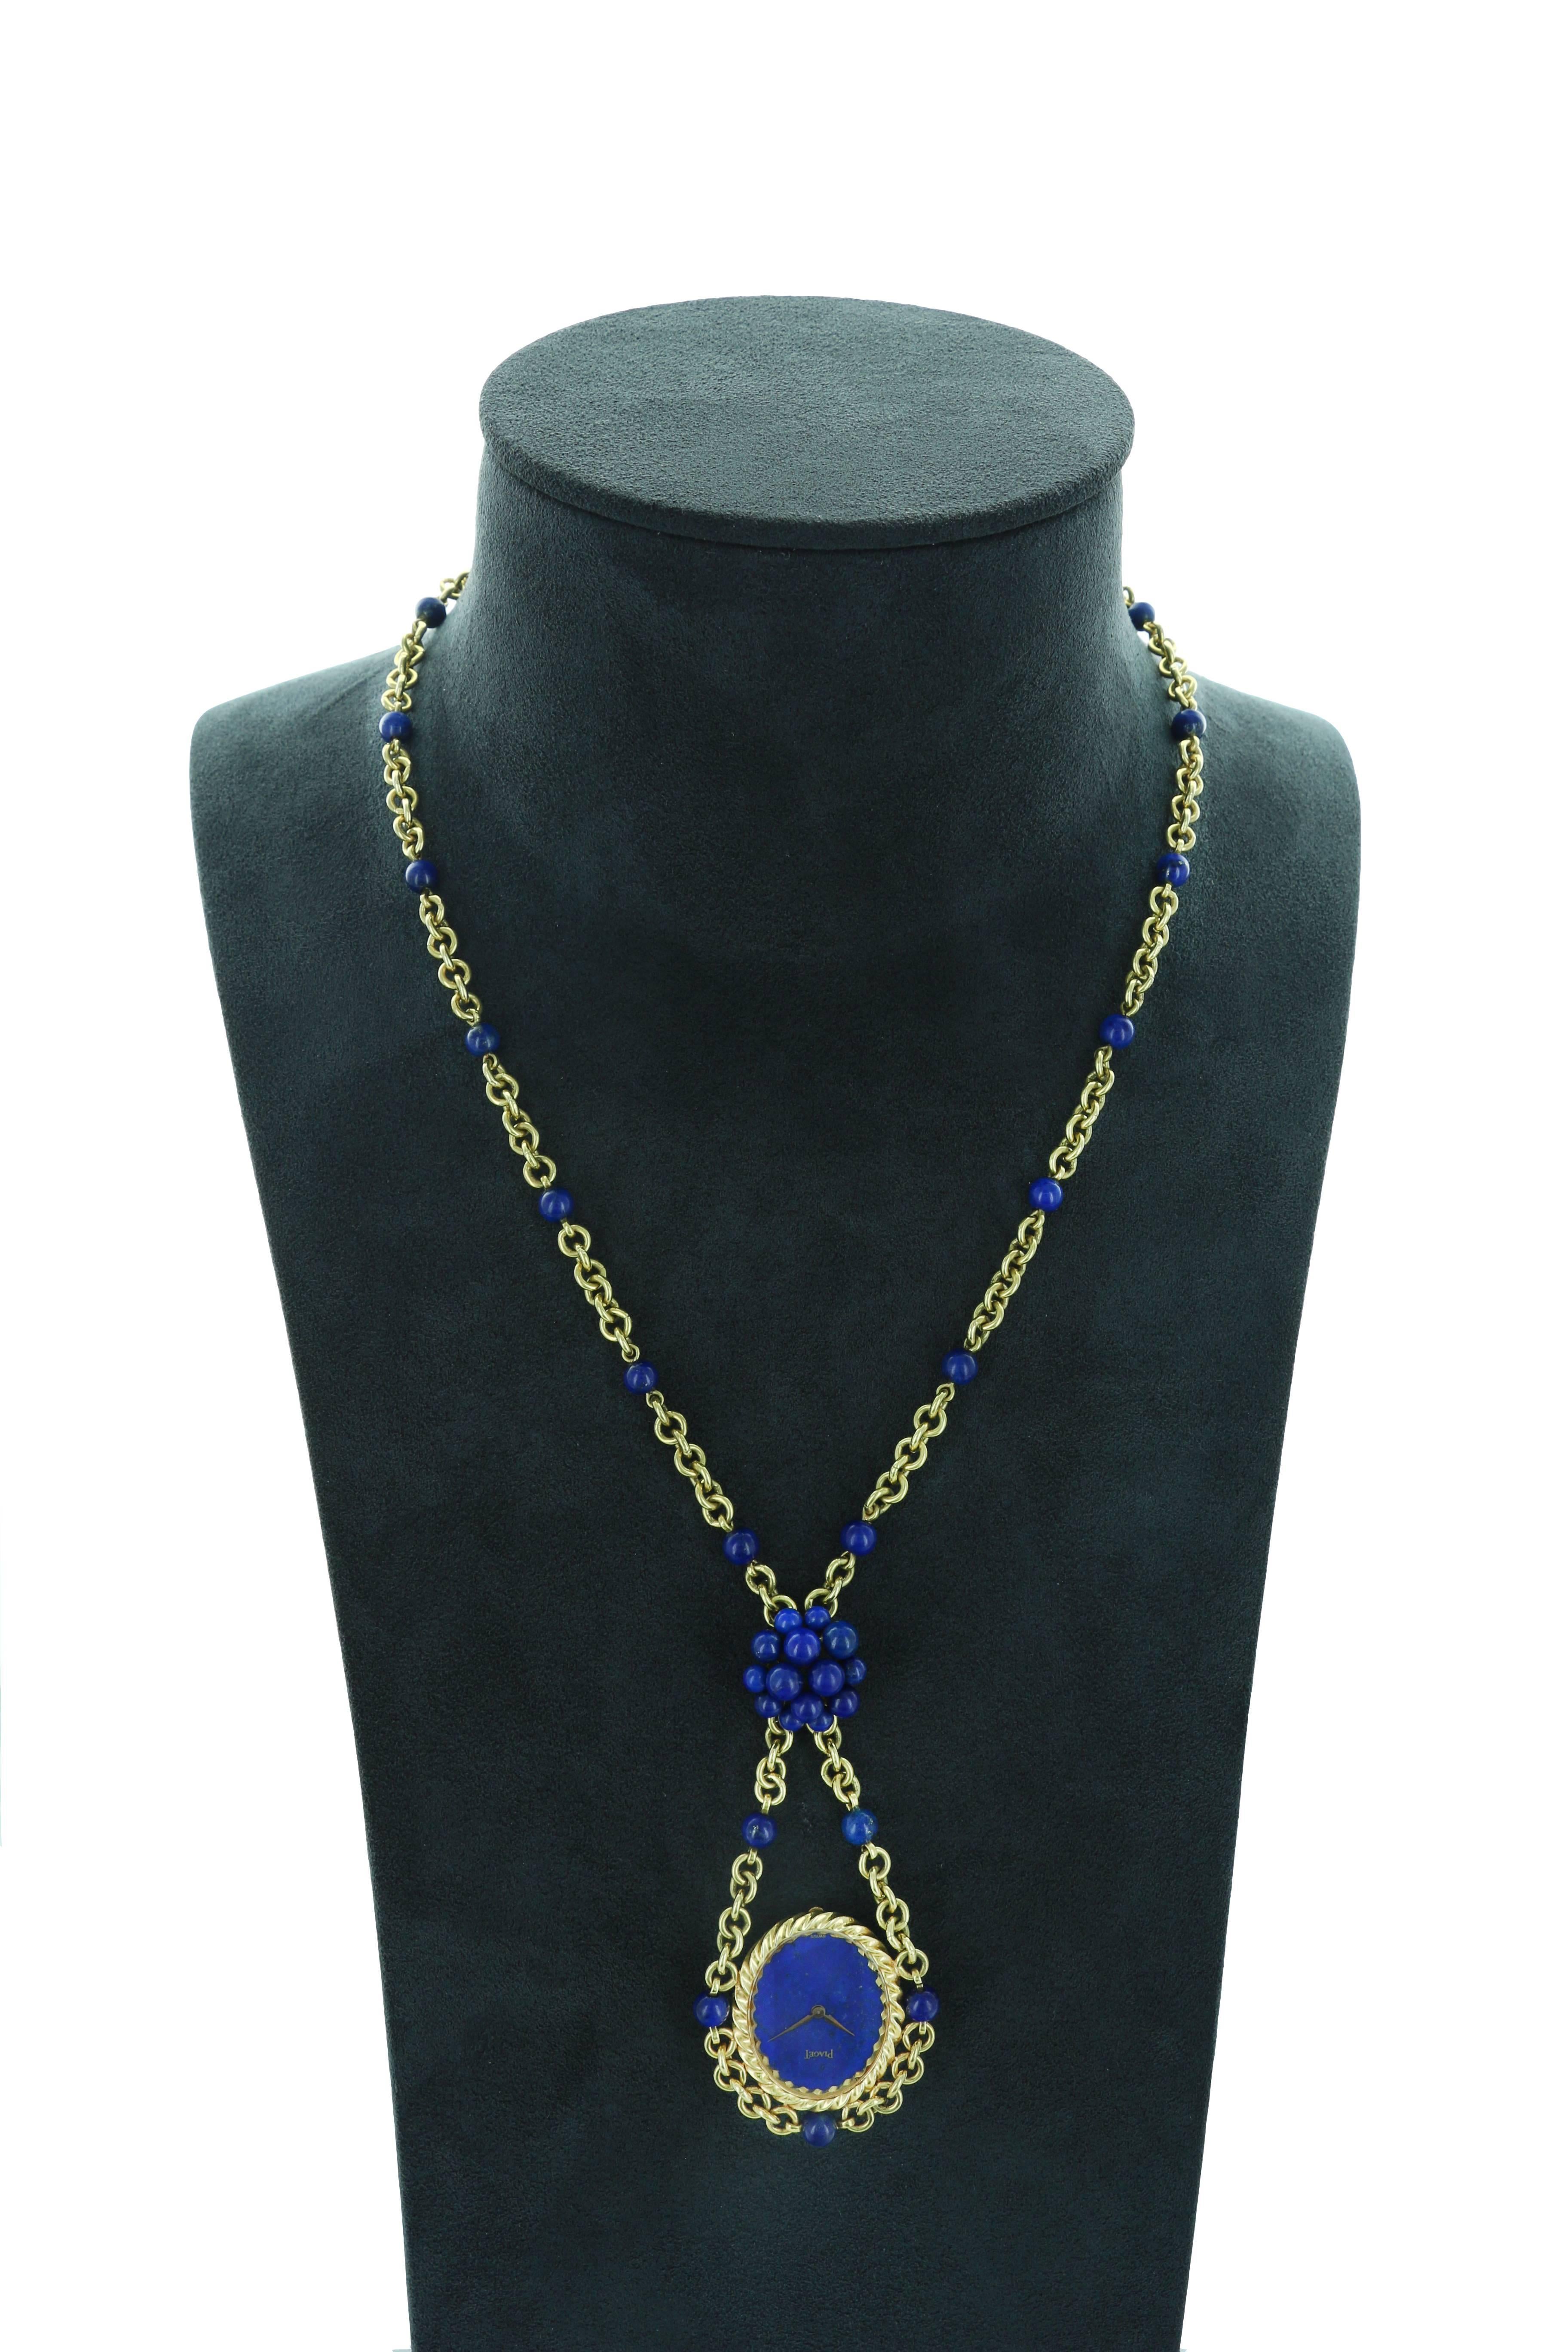 Women's Piaget Lady's Yellow Gold Lapis Lazuli Necklace Watch